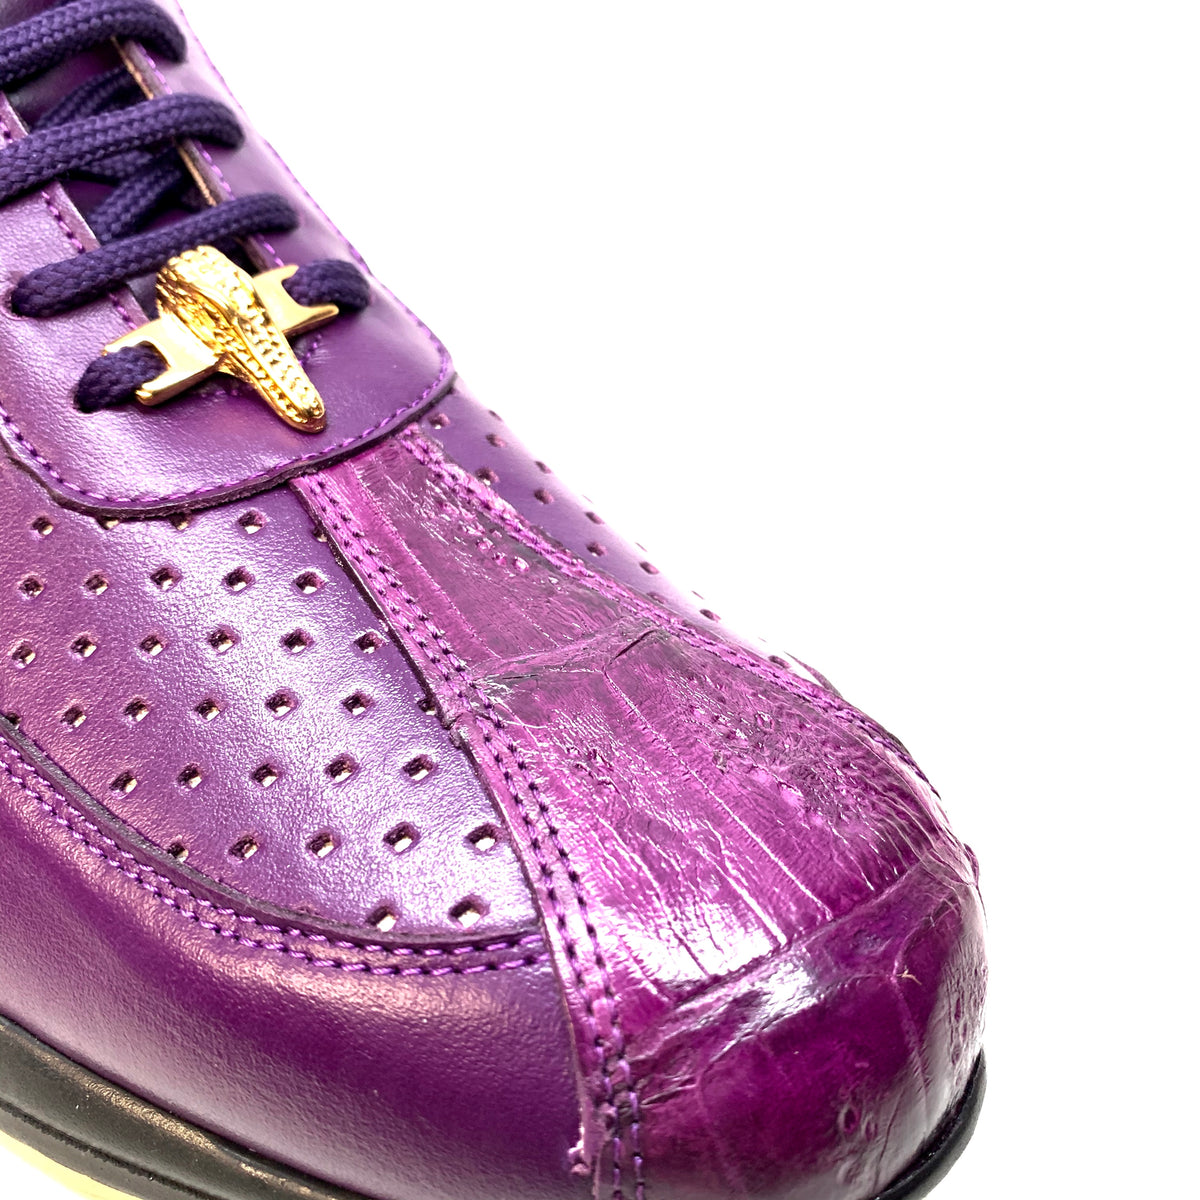 Mauri M770 Purple Crocodile Perforated Nappa Leather Sneaker - Dudes Boutique